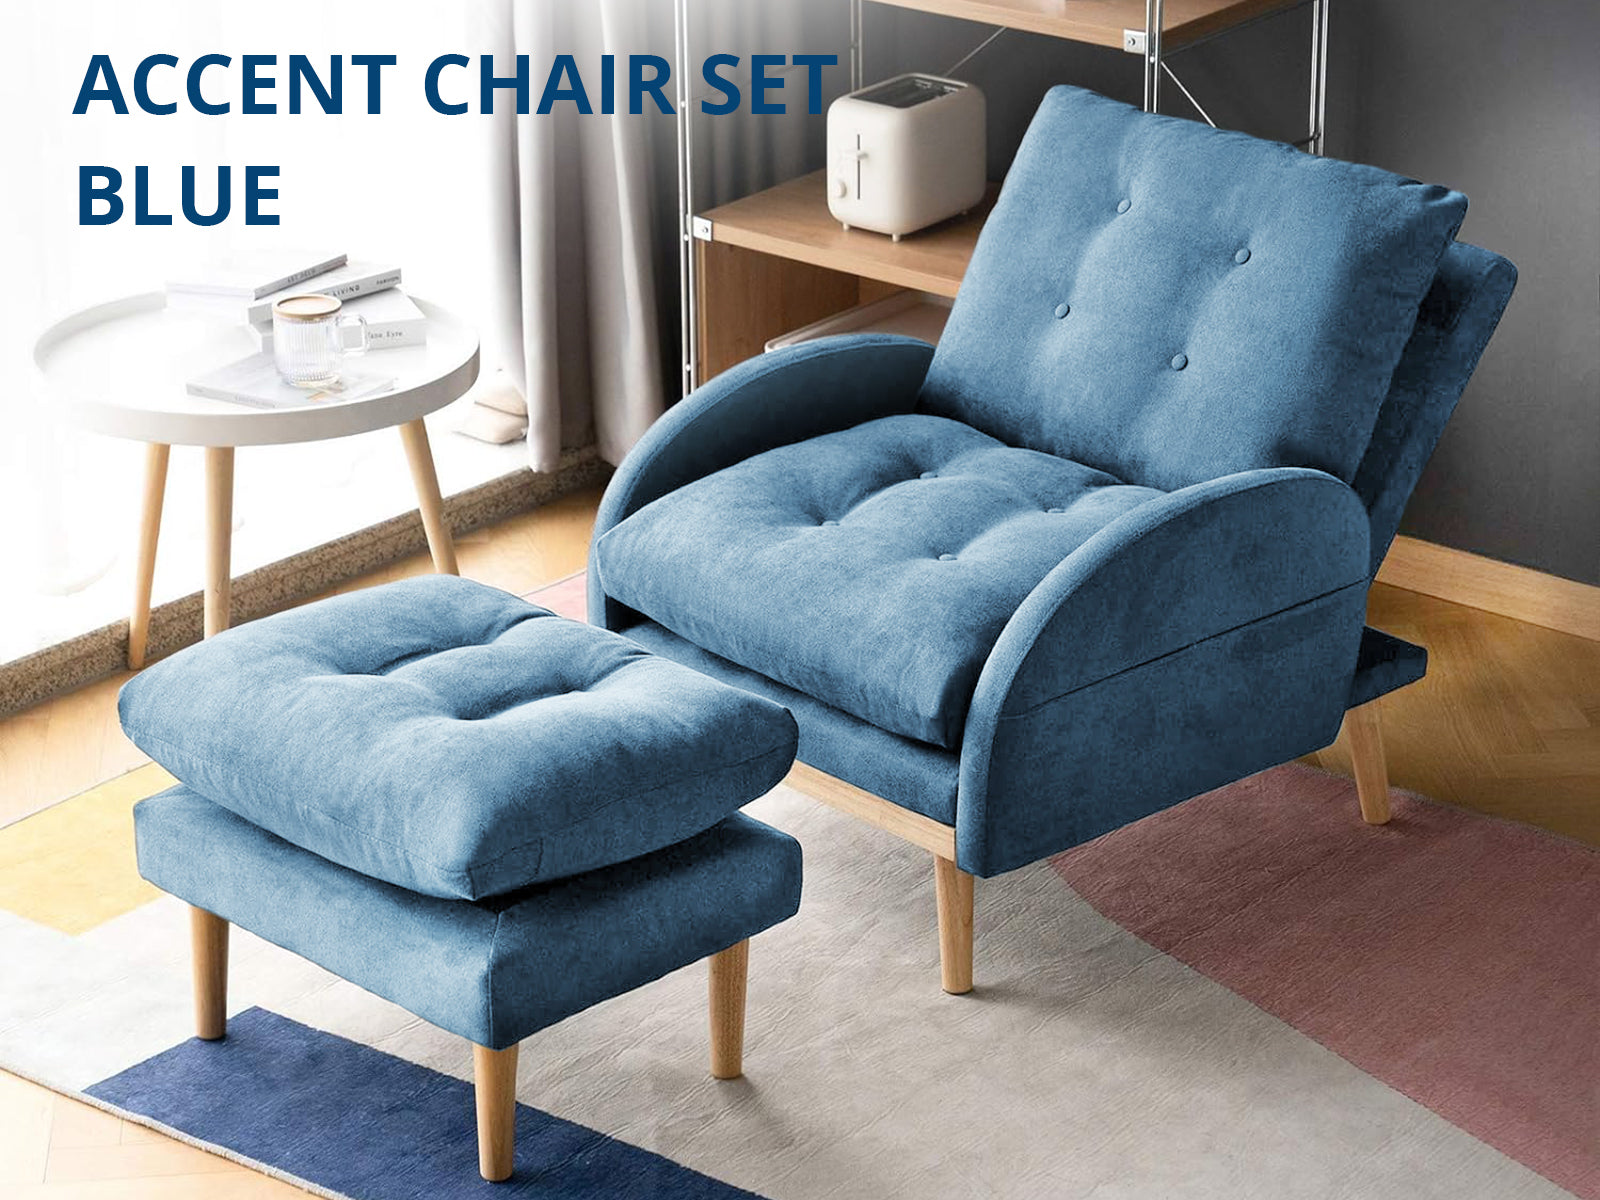 Accent Chair Set Blue